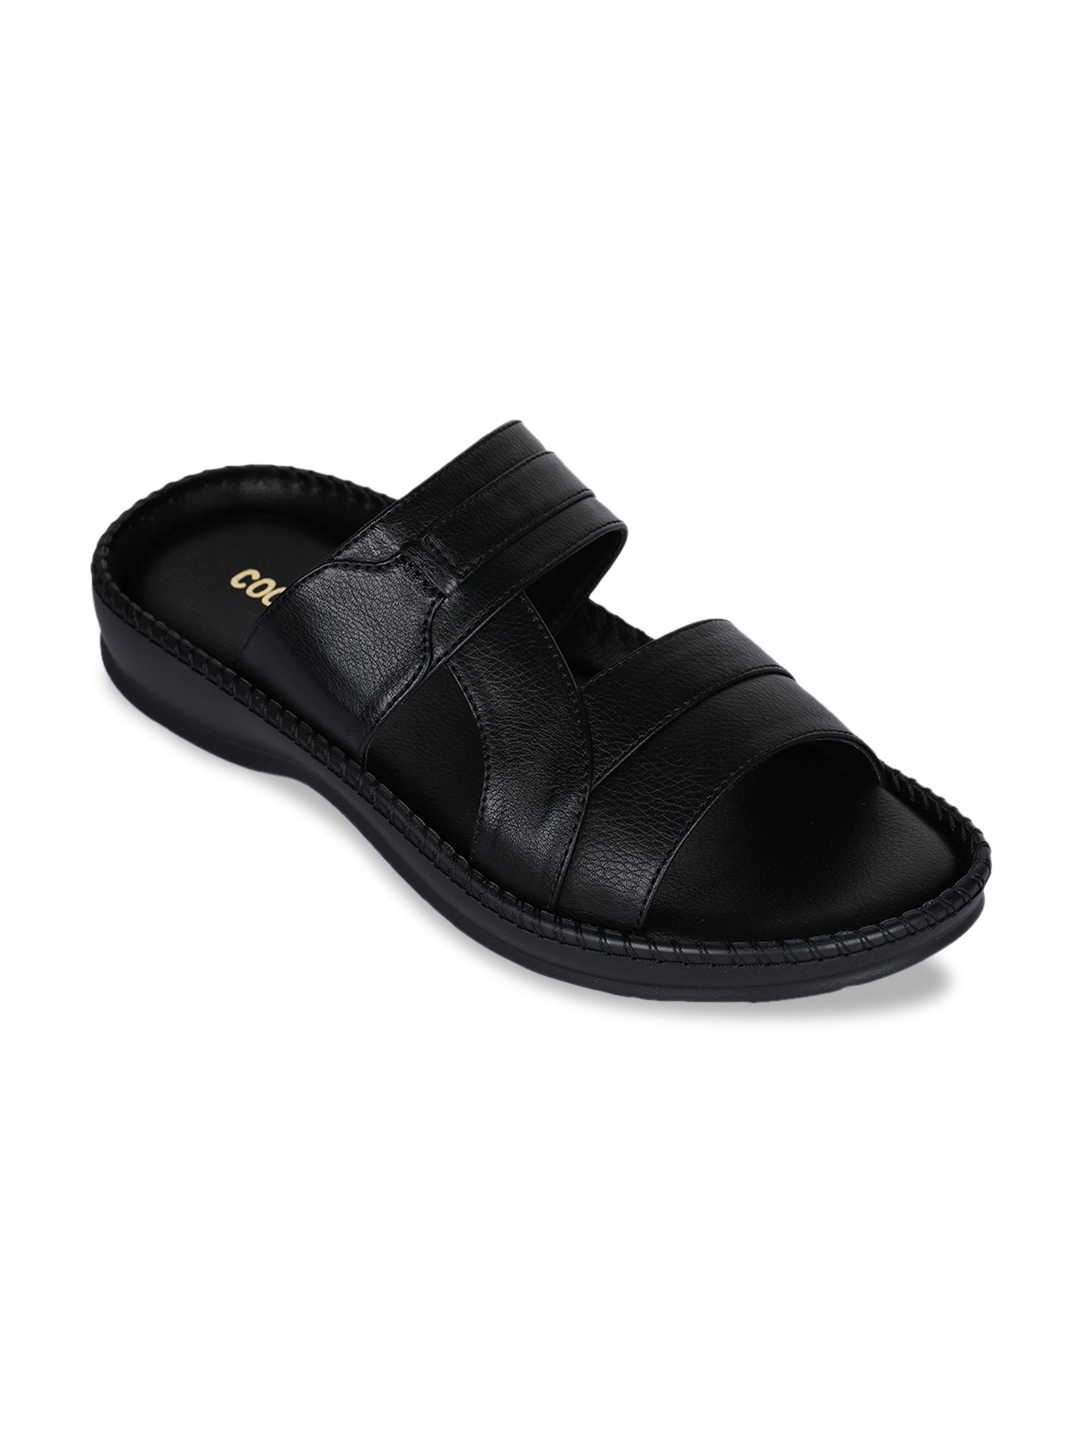 Buy Liberty Men Black Solid Comfort Sandals - Sandals for Men 12451820 ...